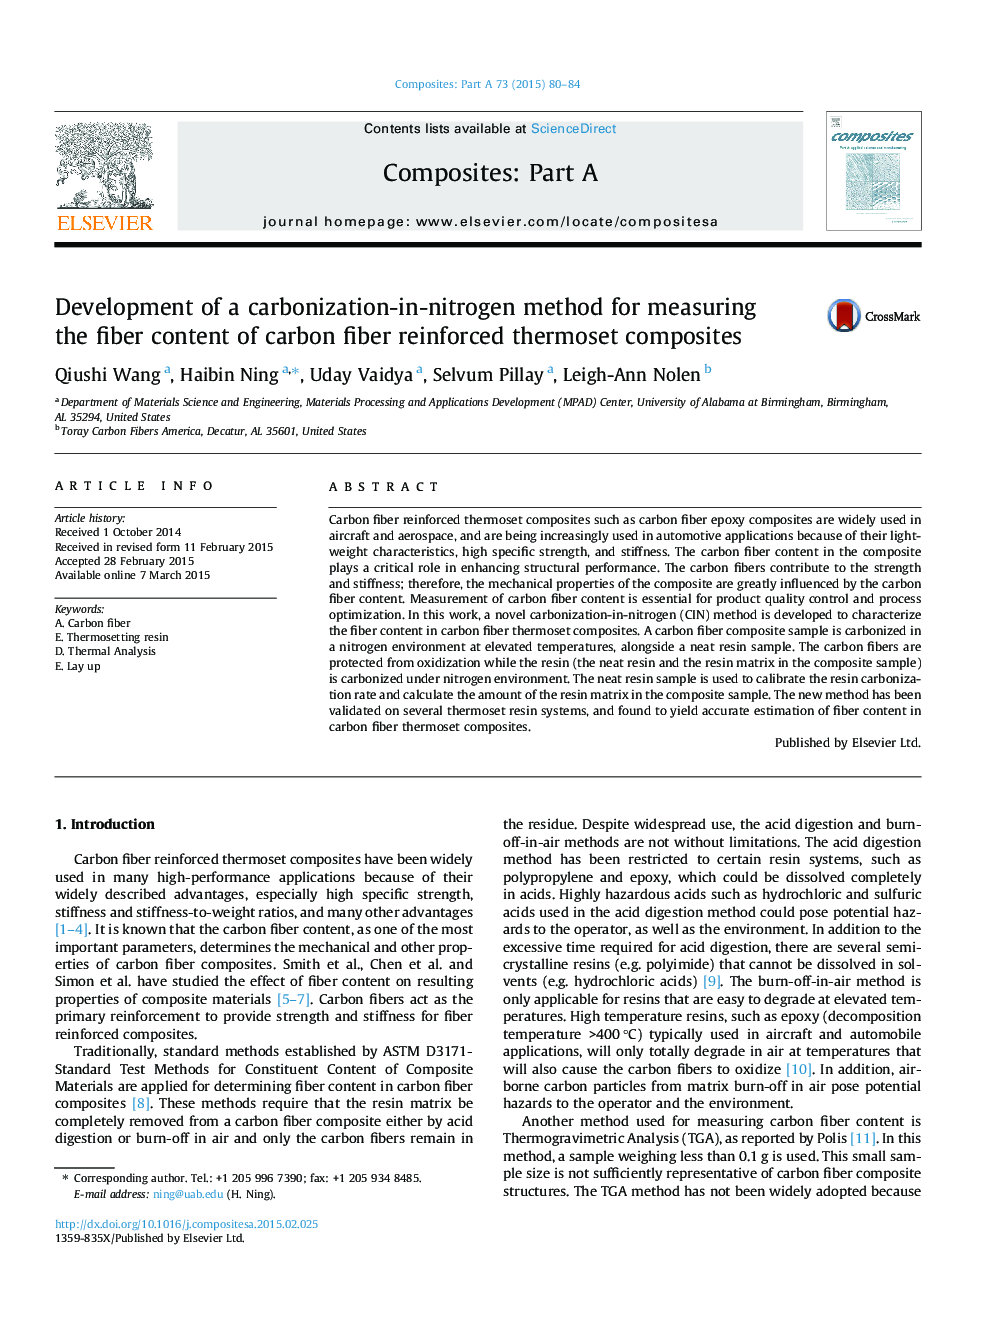 Development of a carbonization-in-nitrogen method for measuring the fiber content of carbon fiber reinforced thermoset composites